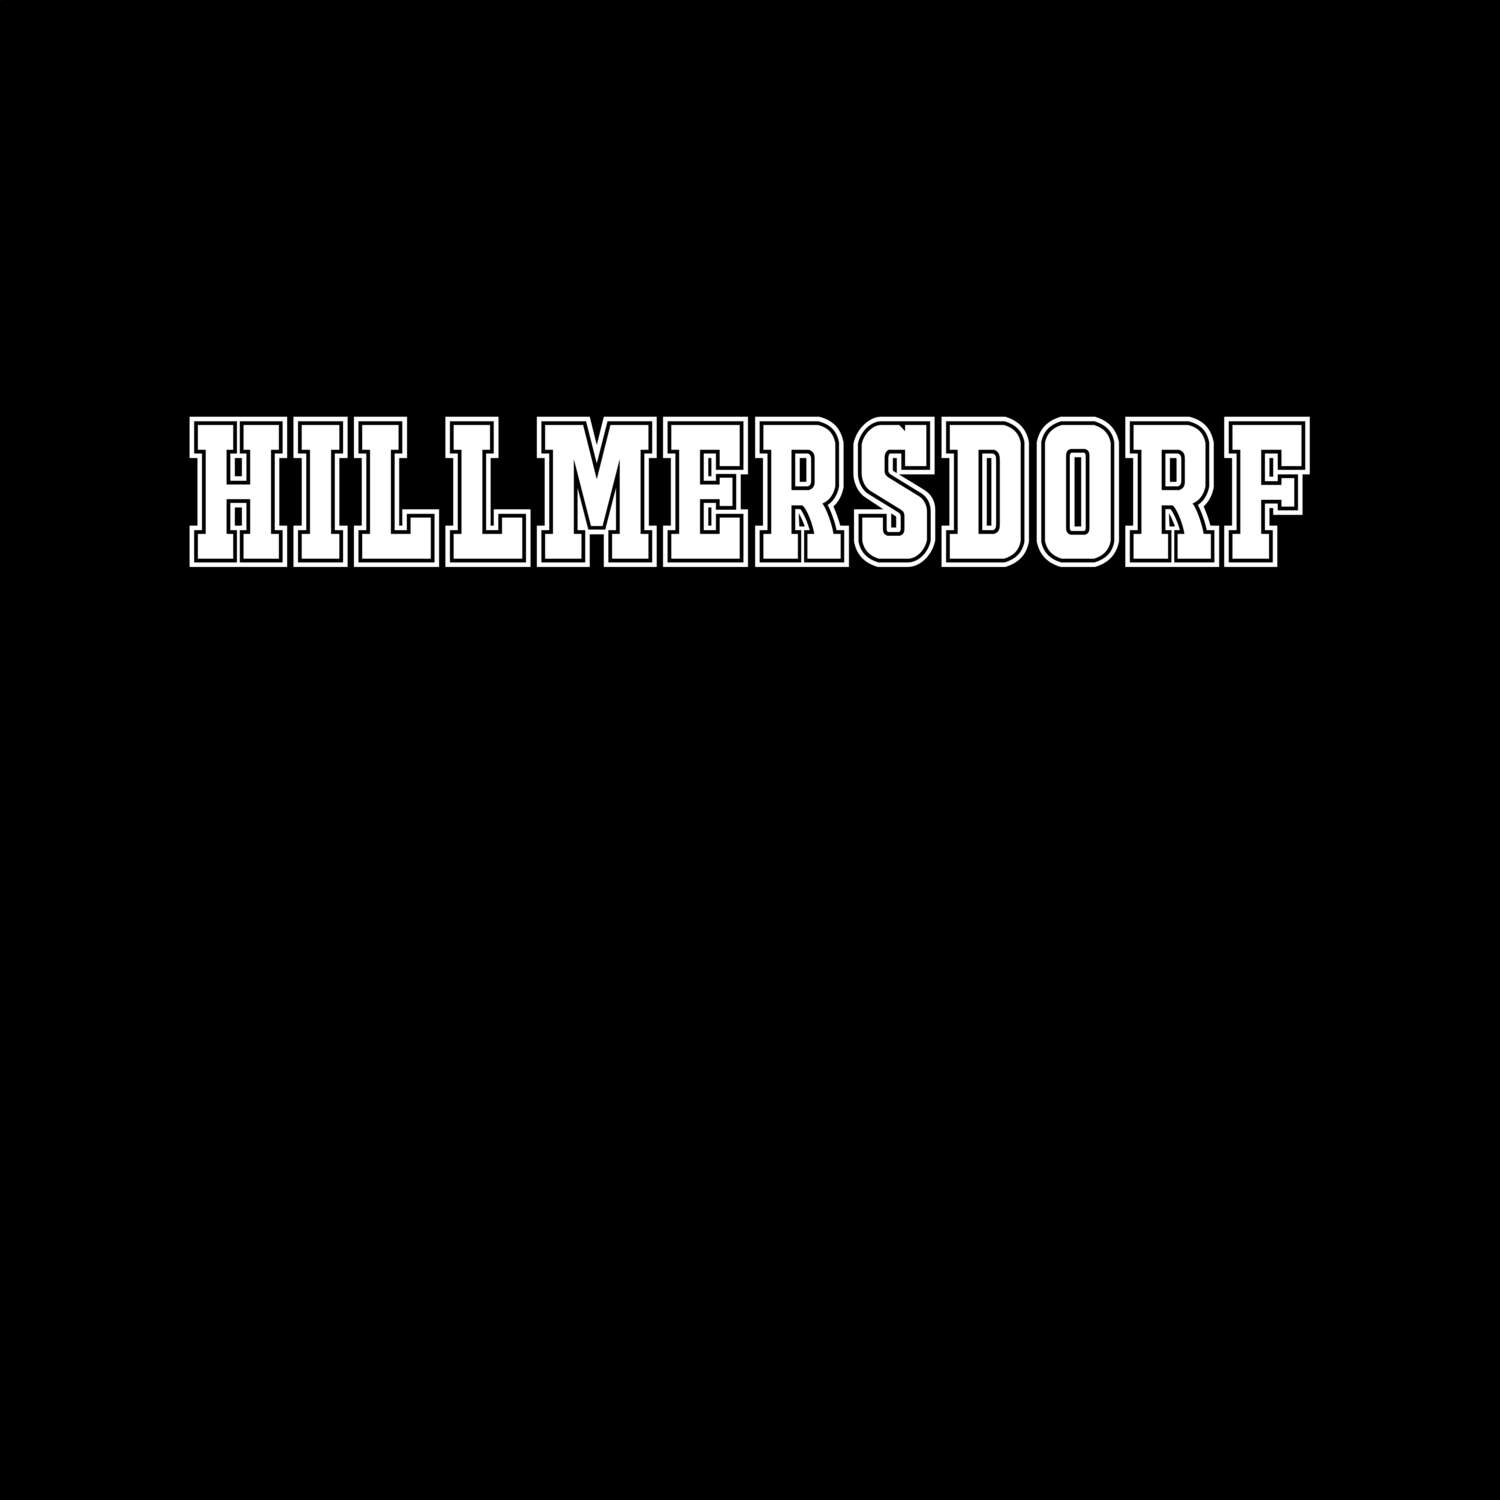 Hillmersdorf T-Shirt »Classic«